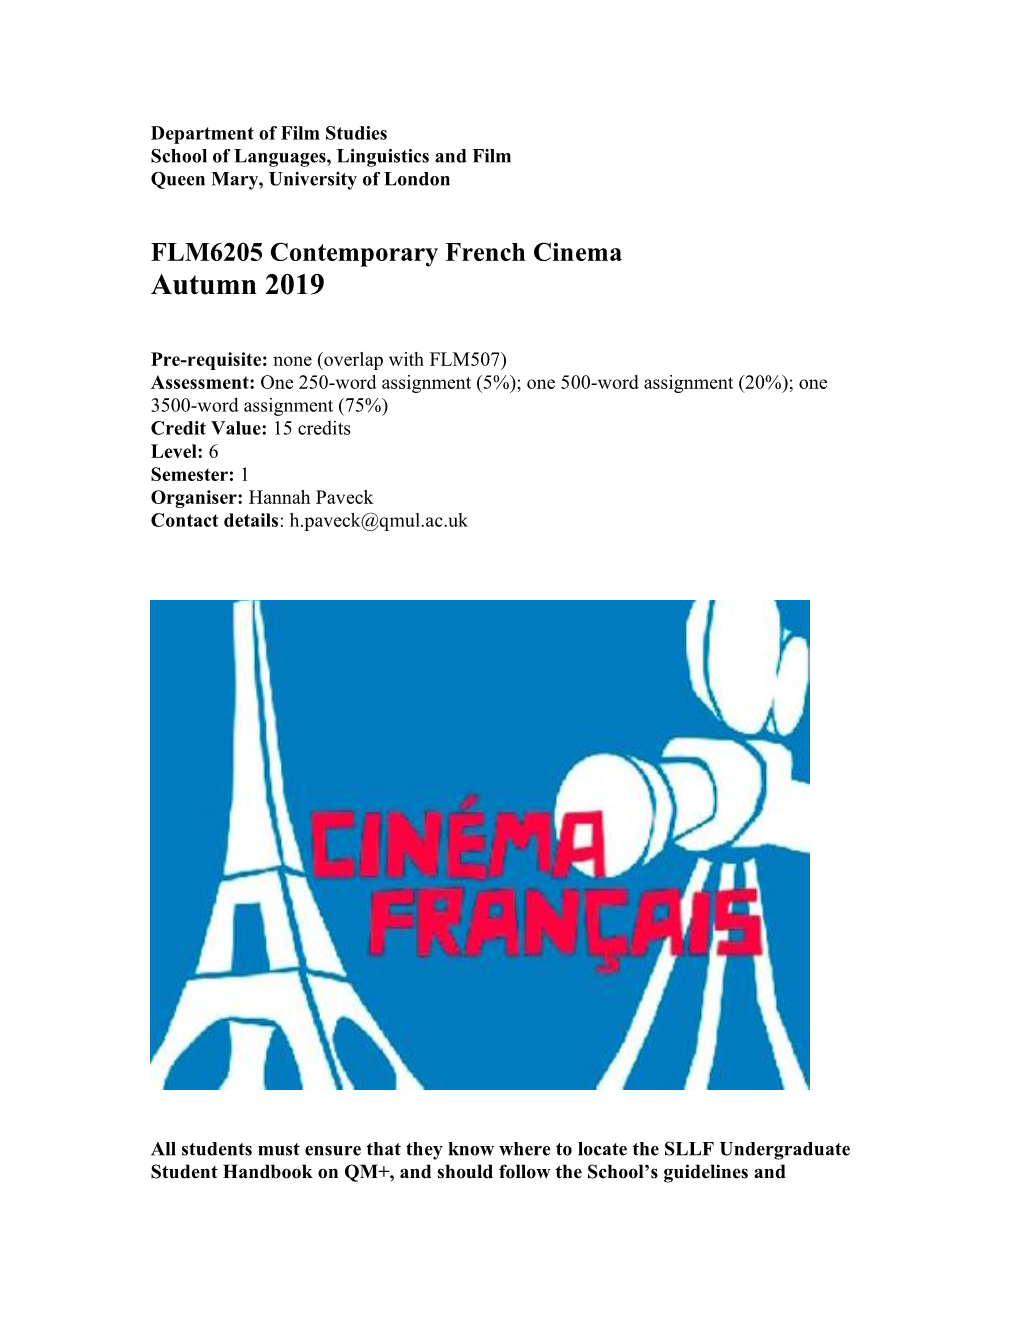 FLM6205 Contemporary French Cinema Autumn 2019